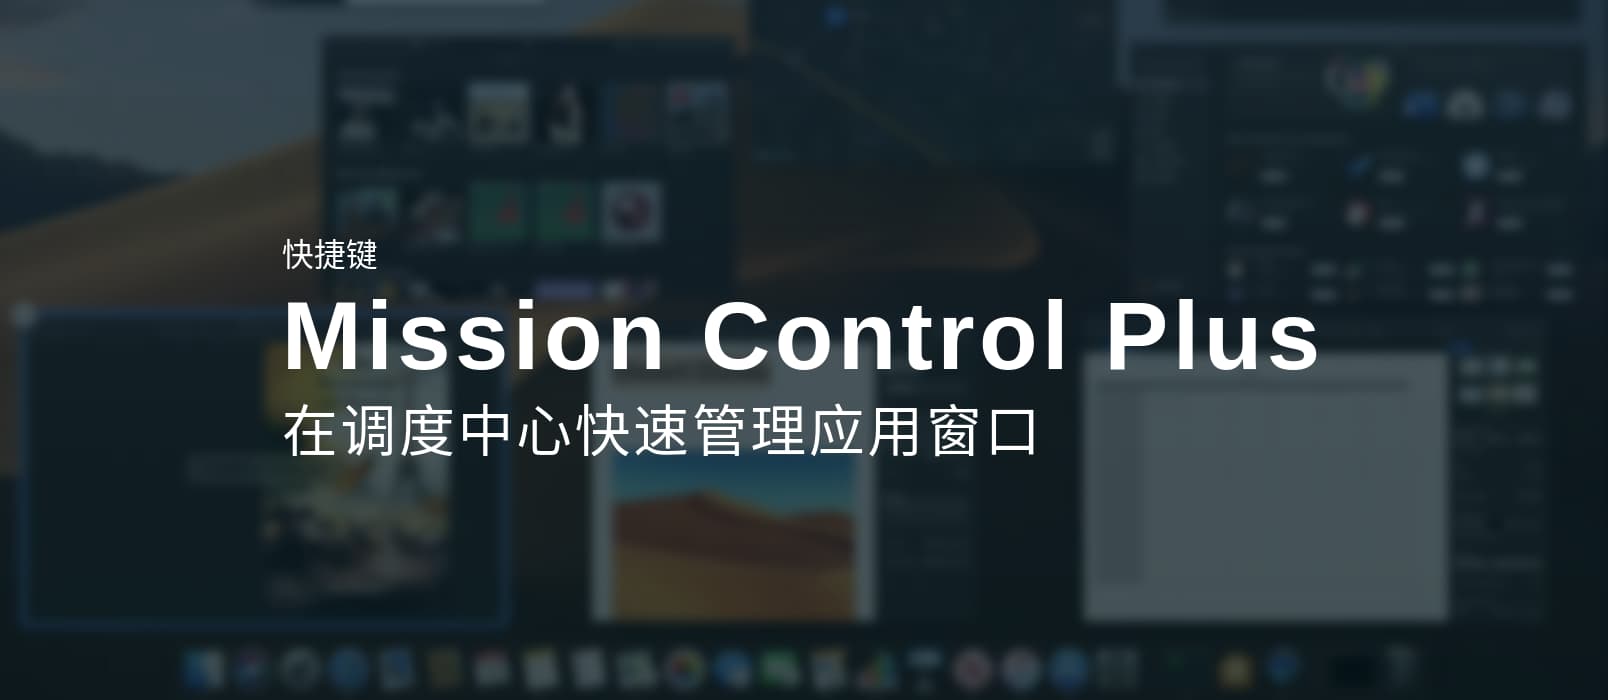 Mission Control Plus - 在 Mac 调度中心 Mission Control 管理应用，并添加快捷键 1